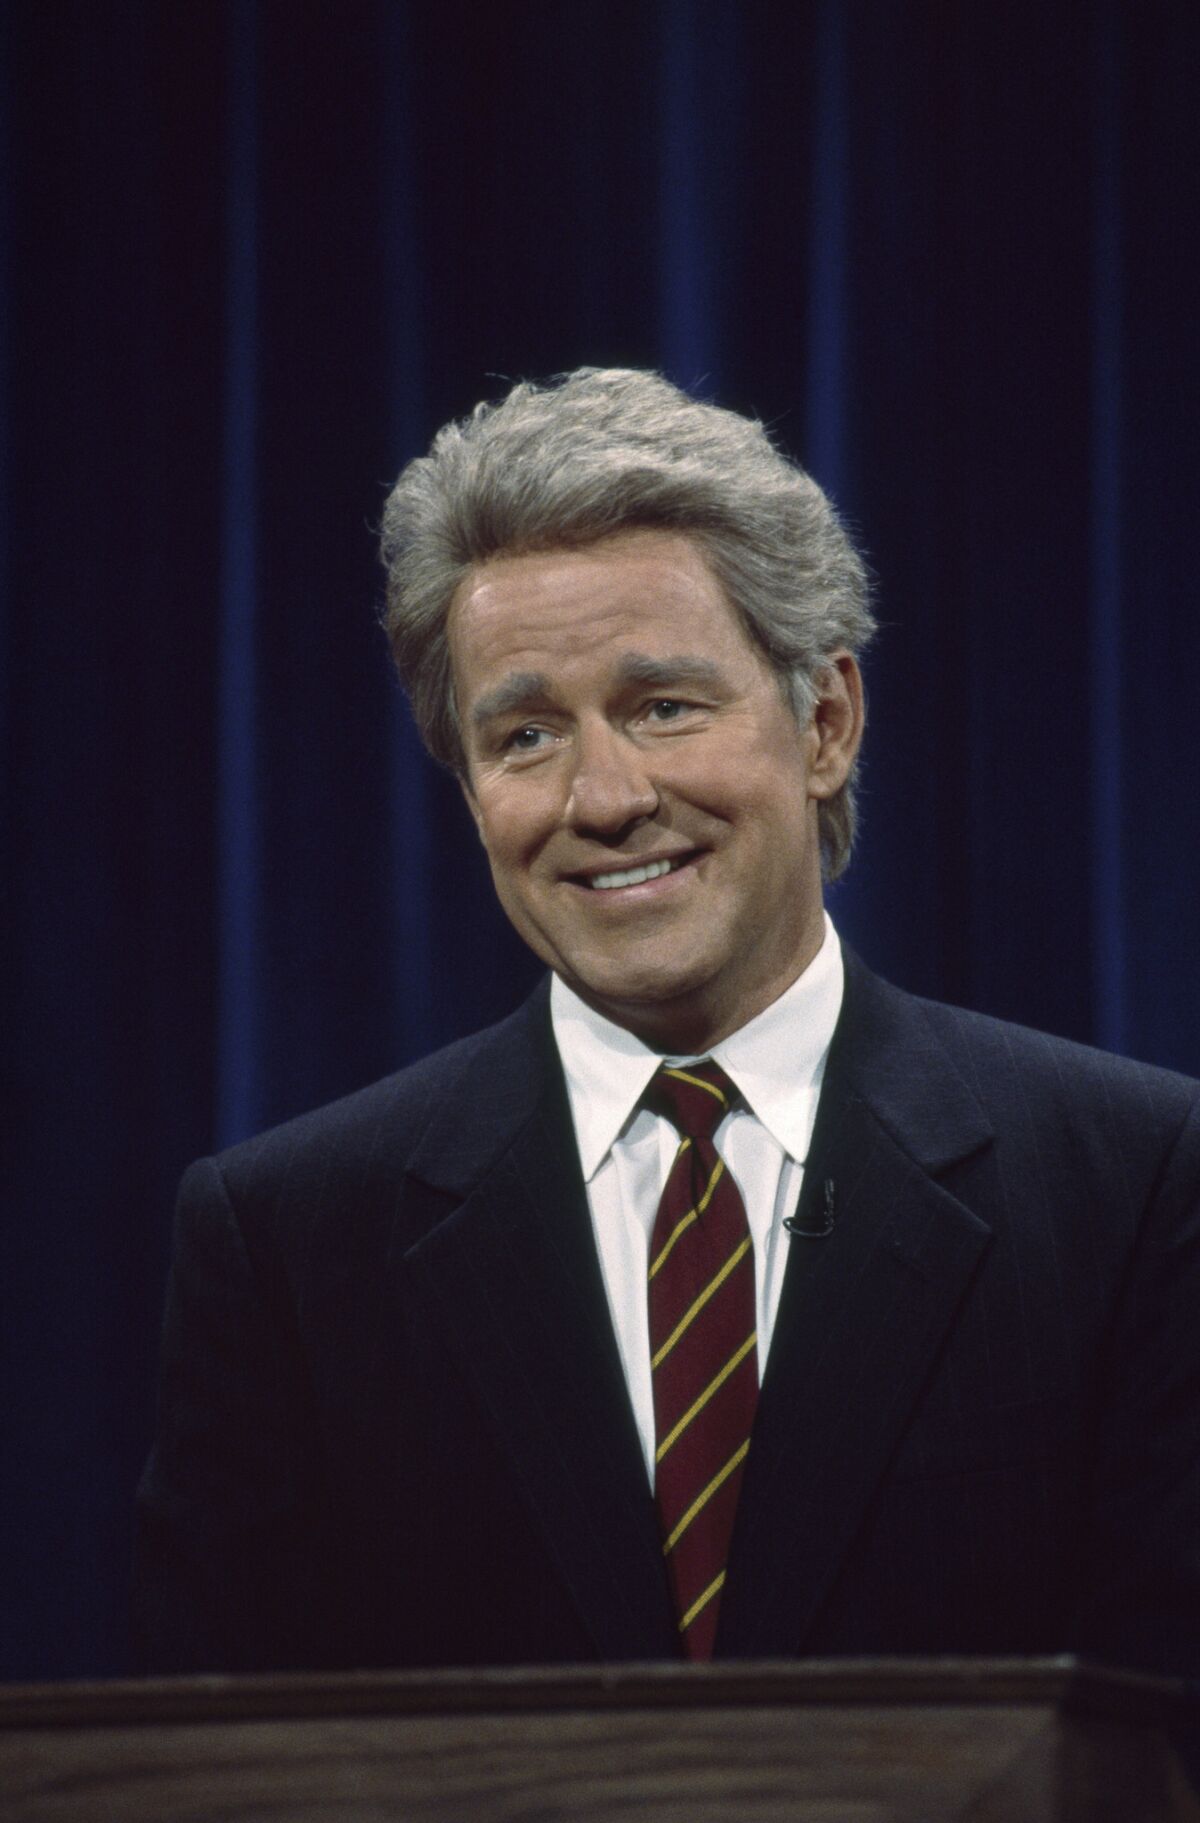 Phil Hartman as Bill Clinton (NBCUniversal)